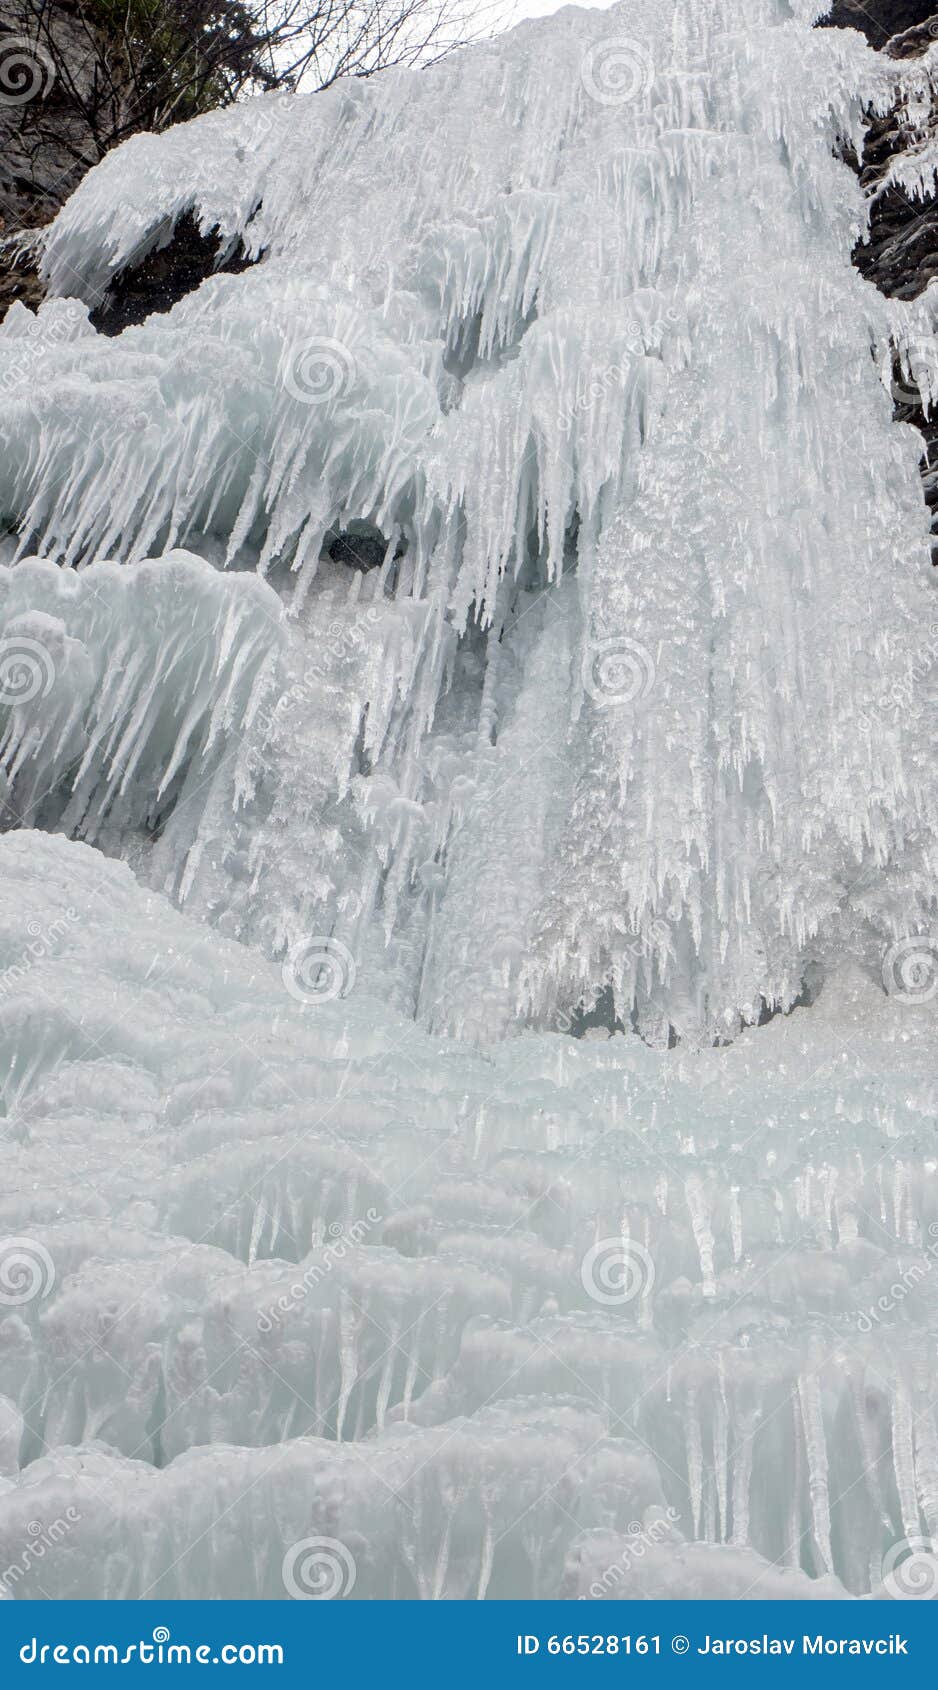 icefall - brankovsky waterfall, slovakia